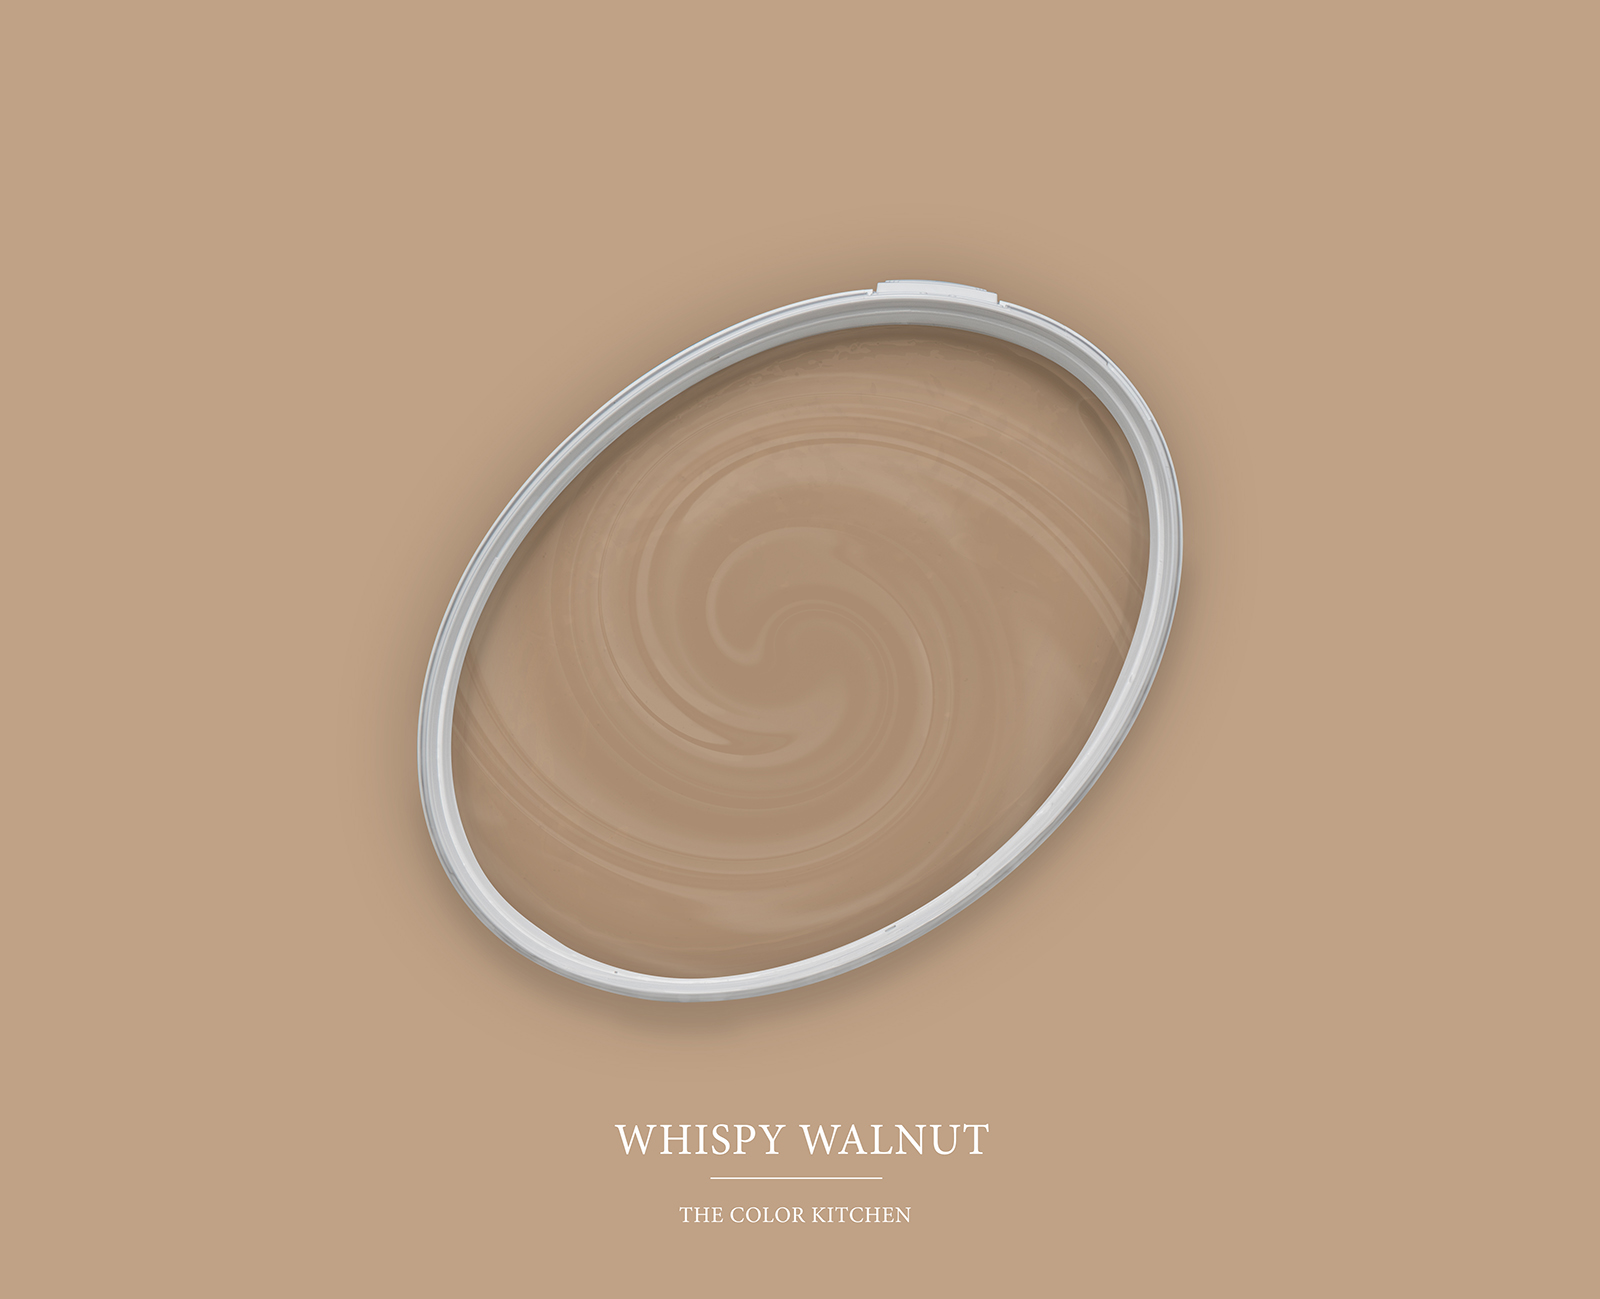         Wandfarbe in intensivem Beige »Whispy Walnut« TCK6011 – 2,5 Liter
    